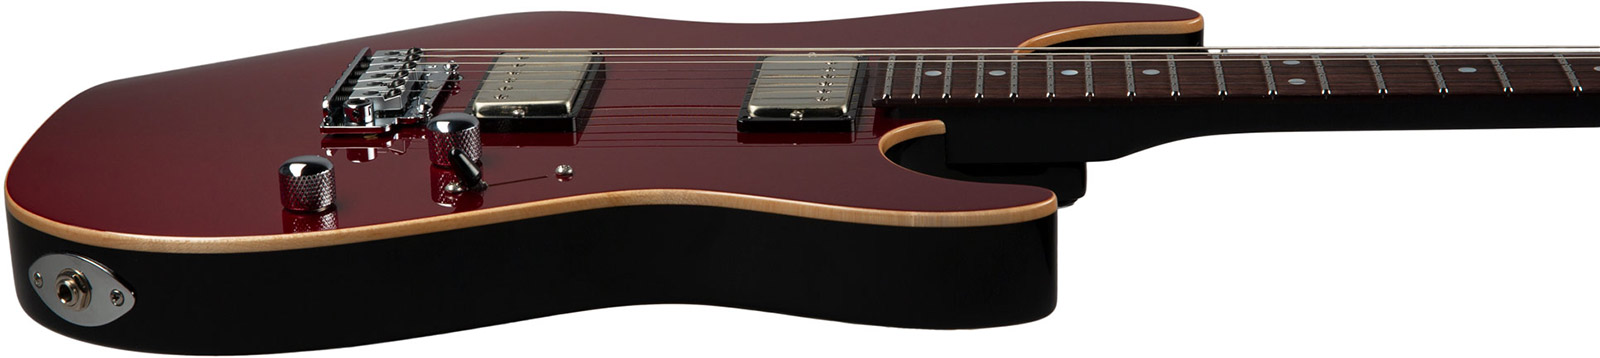 Suhr Pete Thorn Standard 01-sig-0029 Signature 2h Trem Rw - Garnet Red - Guitare Électrique Forme Str - Variation 2